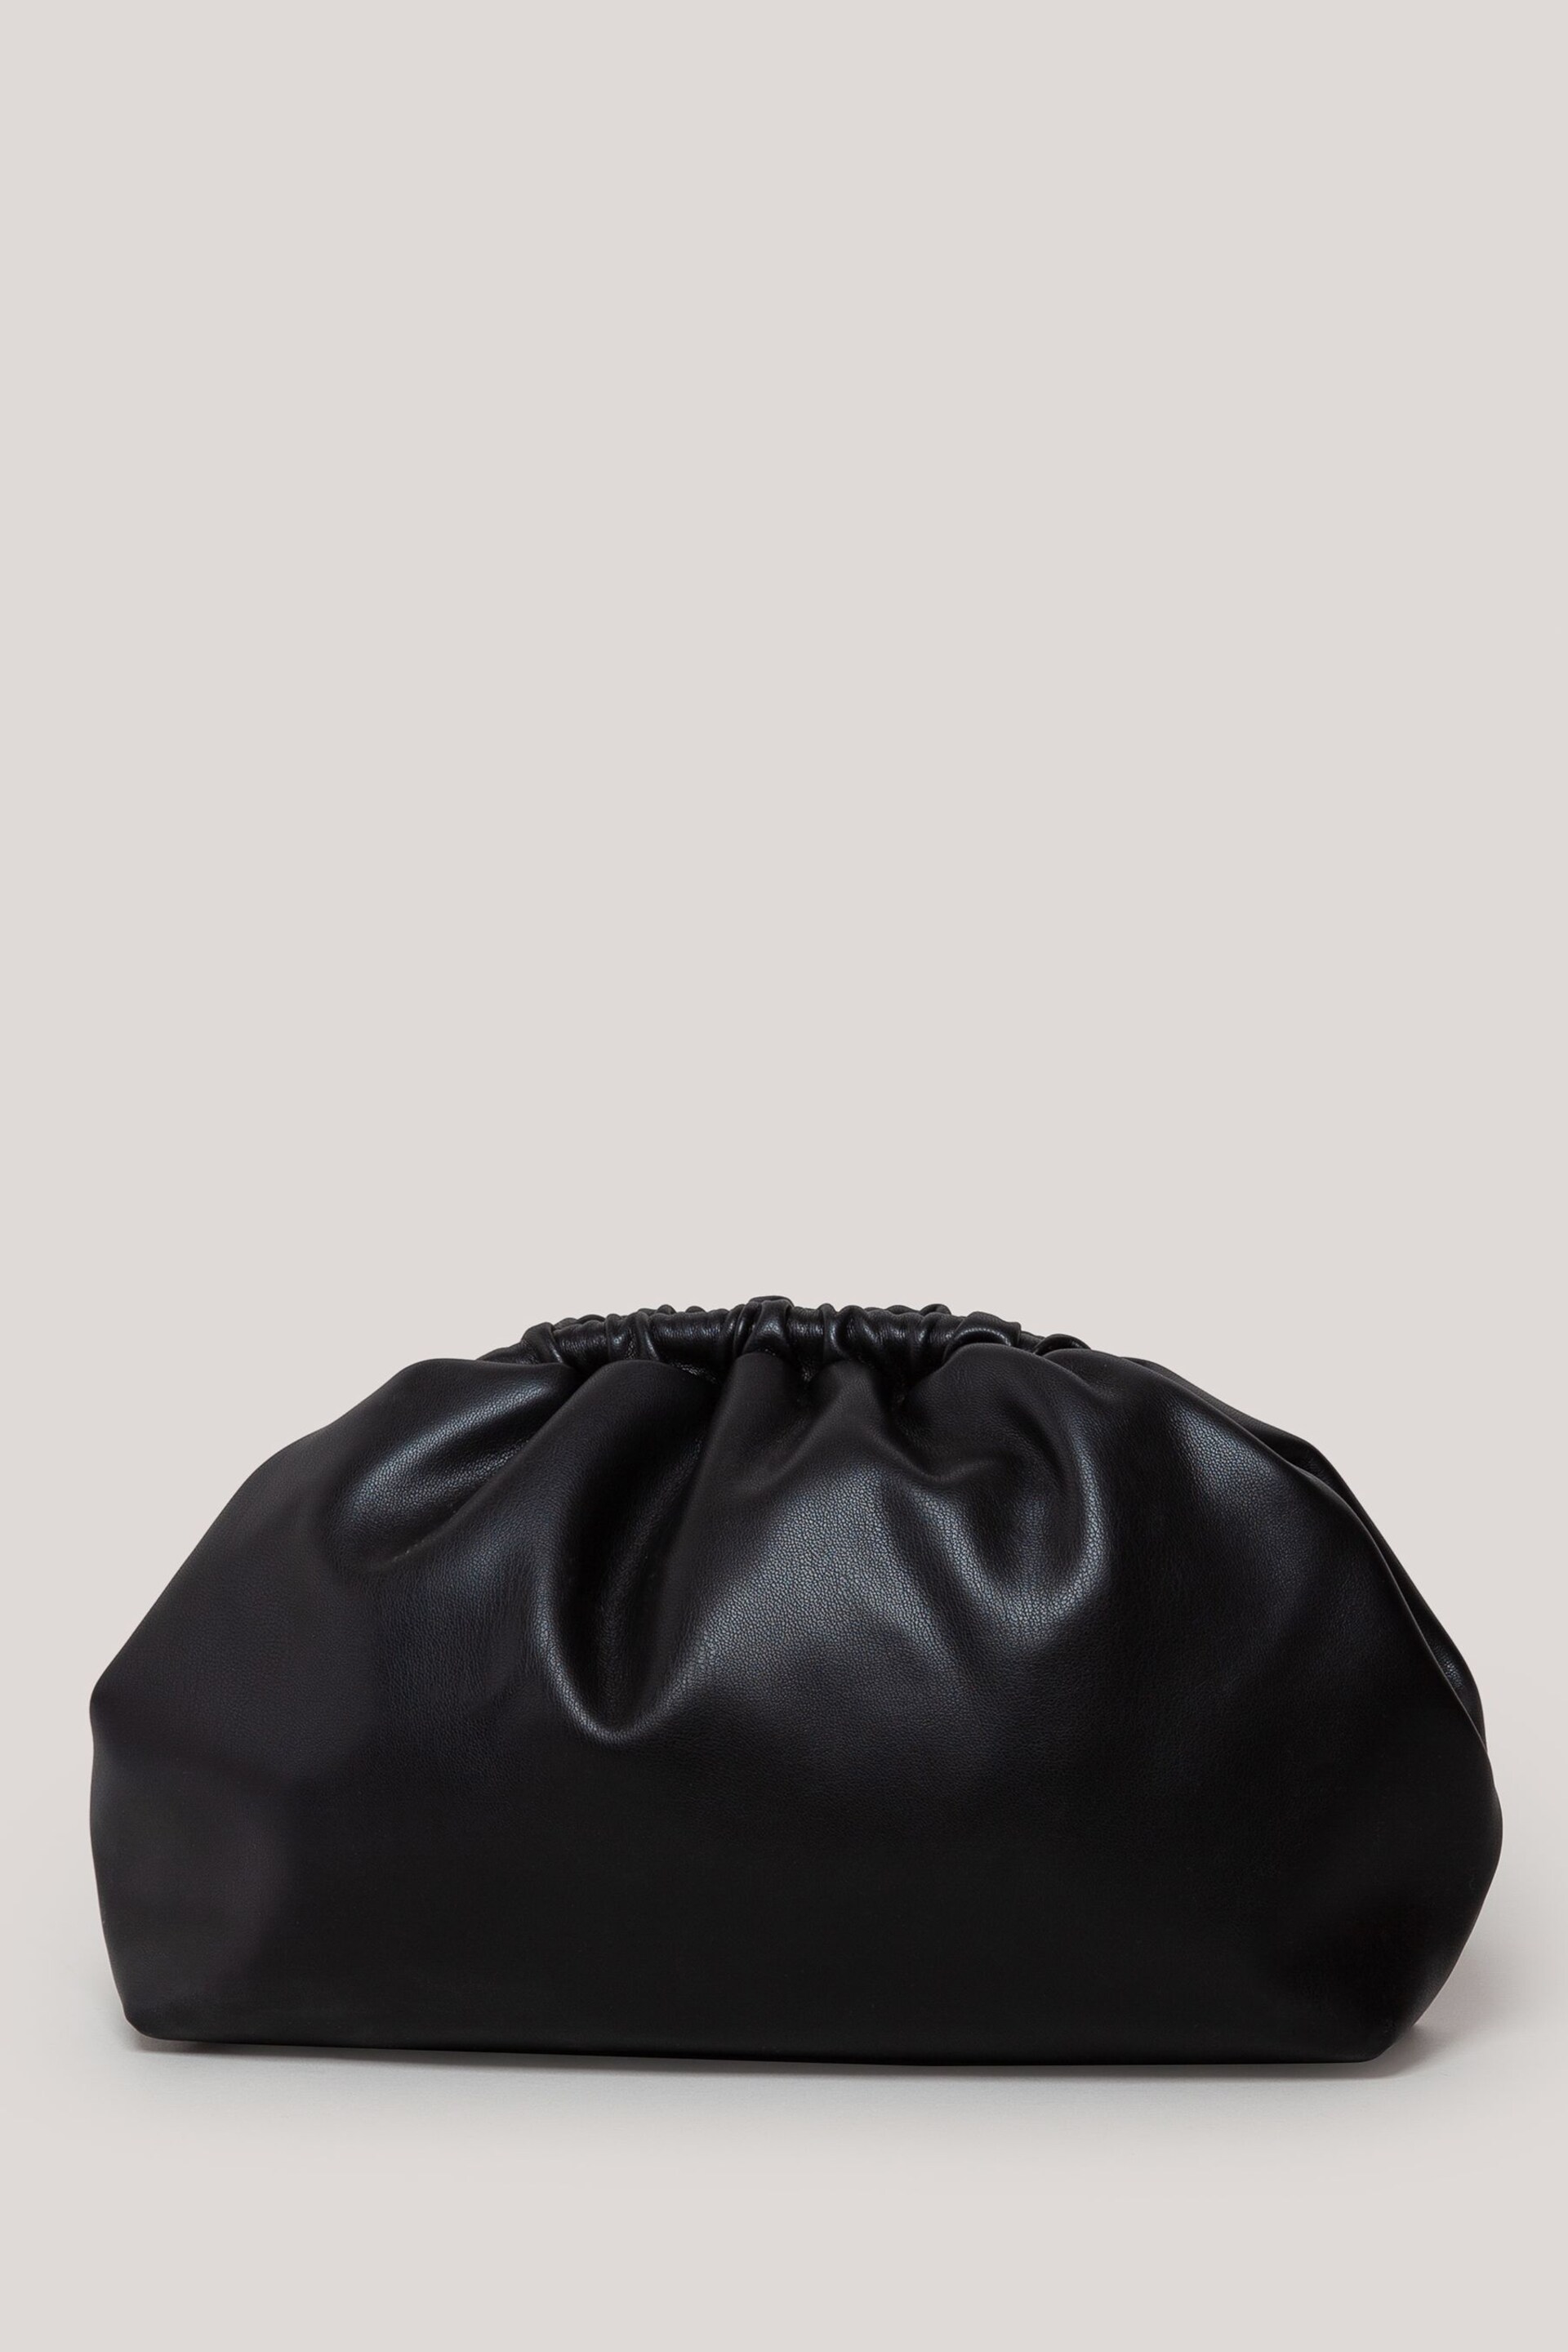 Fiorelli Edith Black Cross-Body Bag - Image 6 of 7